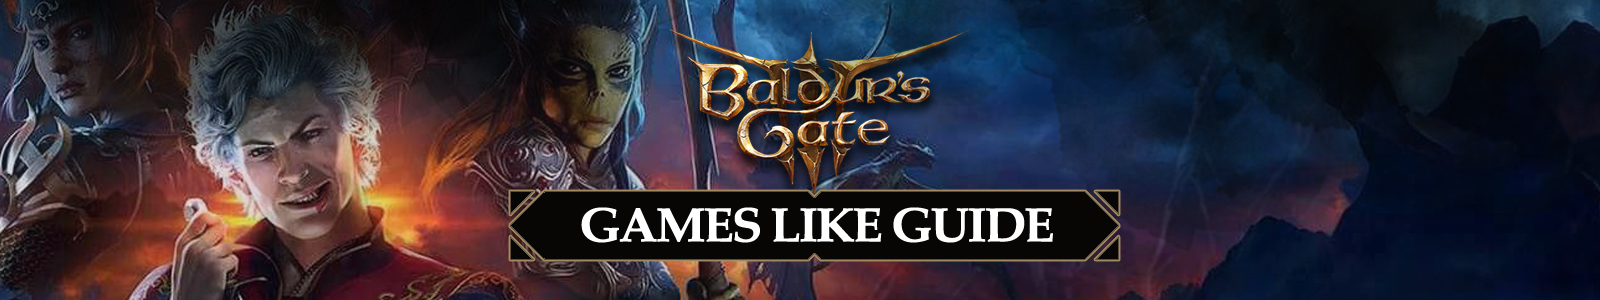 Guida a giochi simili a Baldur's Gate 3